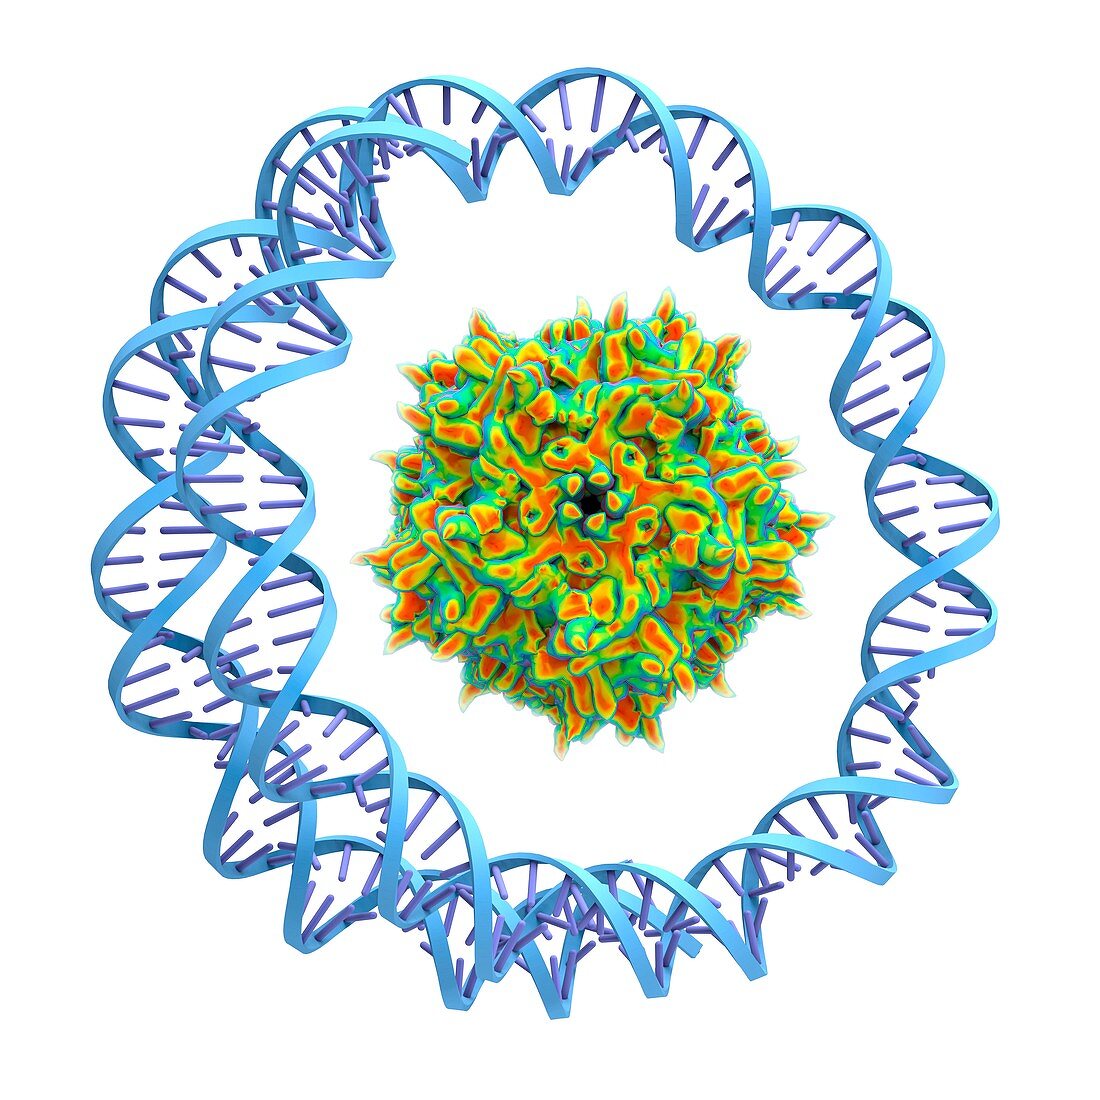 Adeno-associated virus,illustration